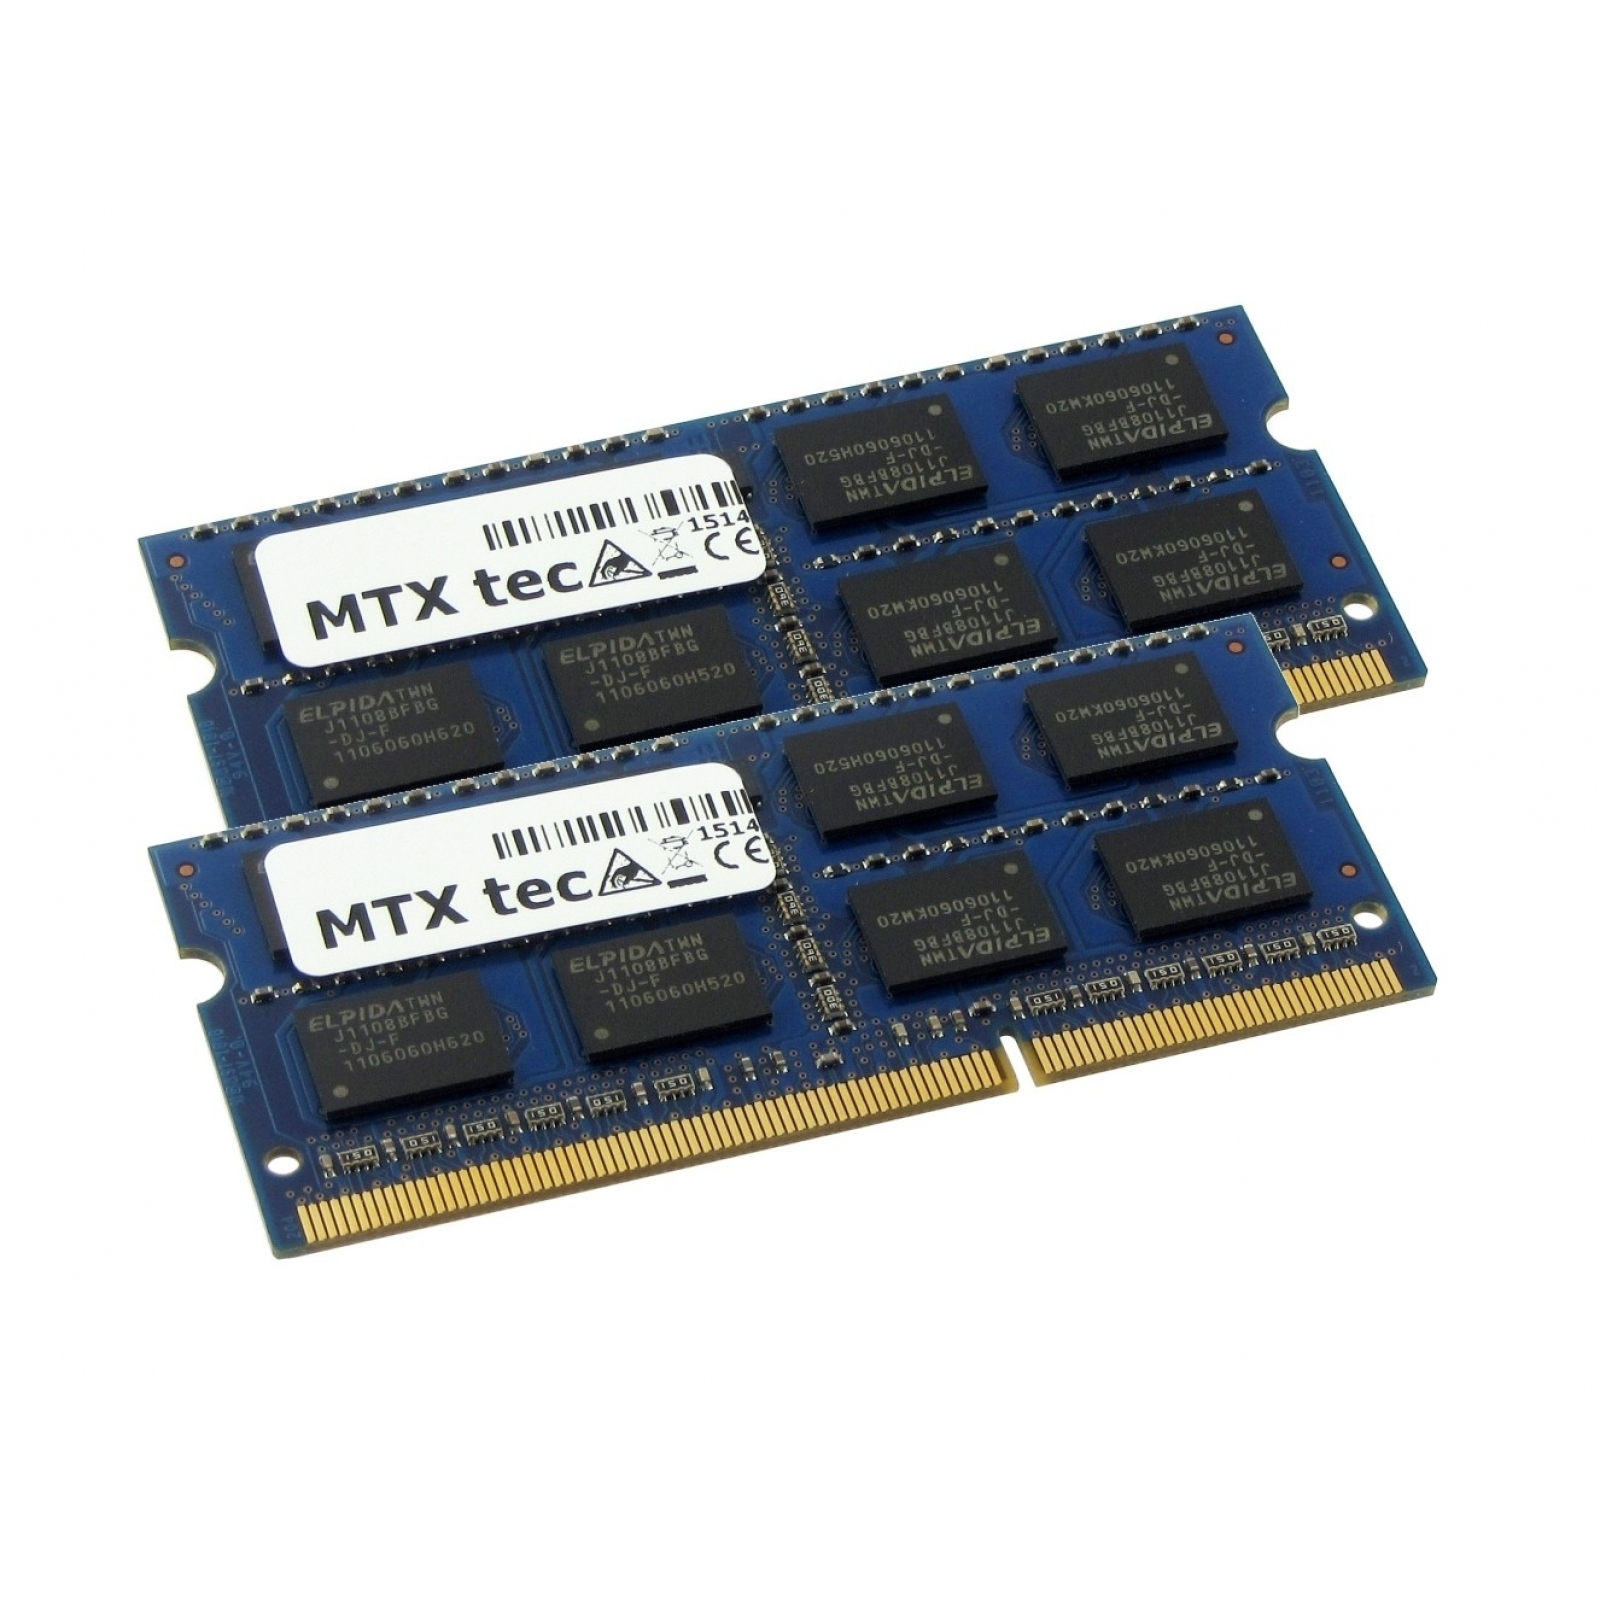 MTXTEC 4GB Kit 2x 2GB 1066MHz DDR3 GB RAM DDR3 Notebook-Speicher SODIMM Laptop-Speicher Pin 204 PC3-8500, 2 DDR3